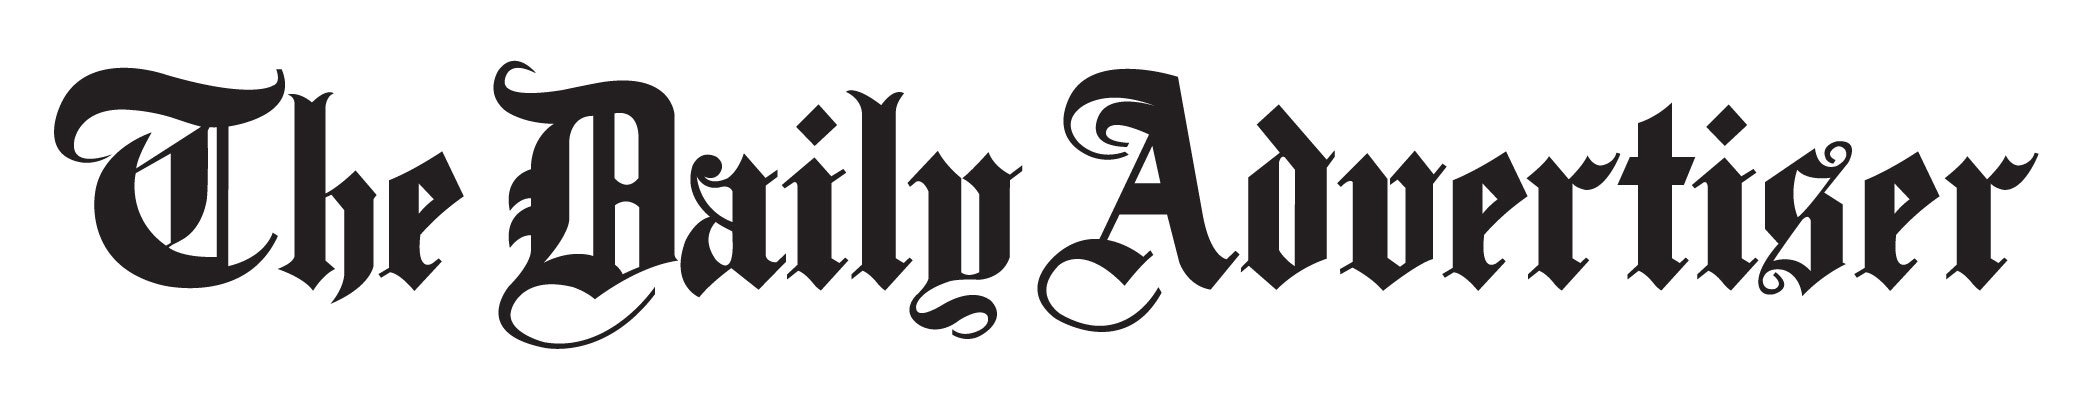 dailyadvertiser-logo.jpg